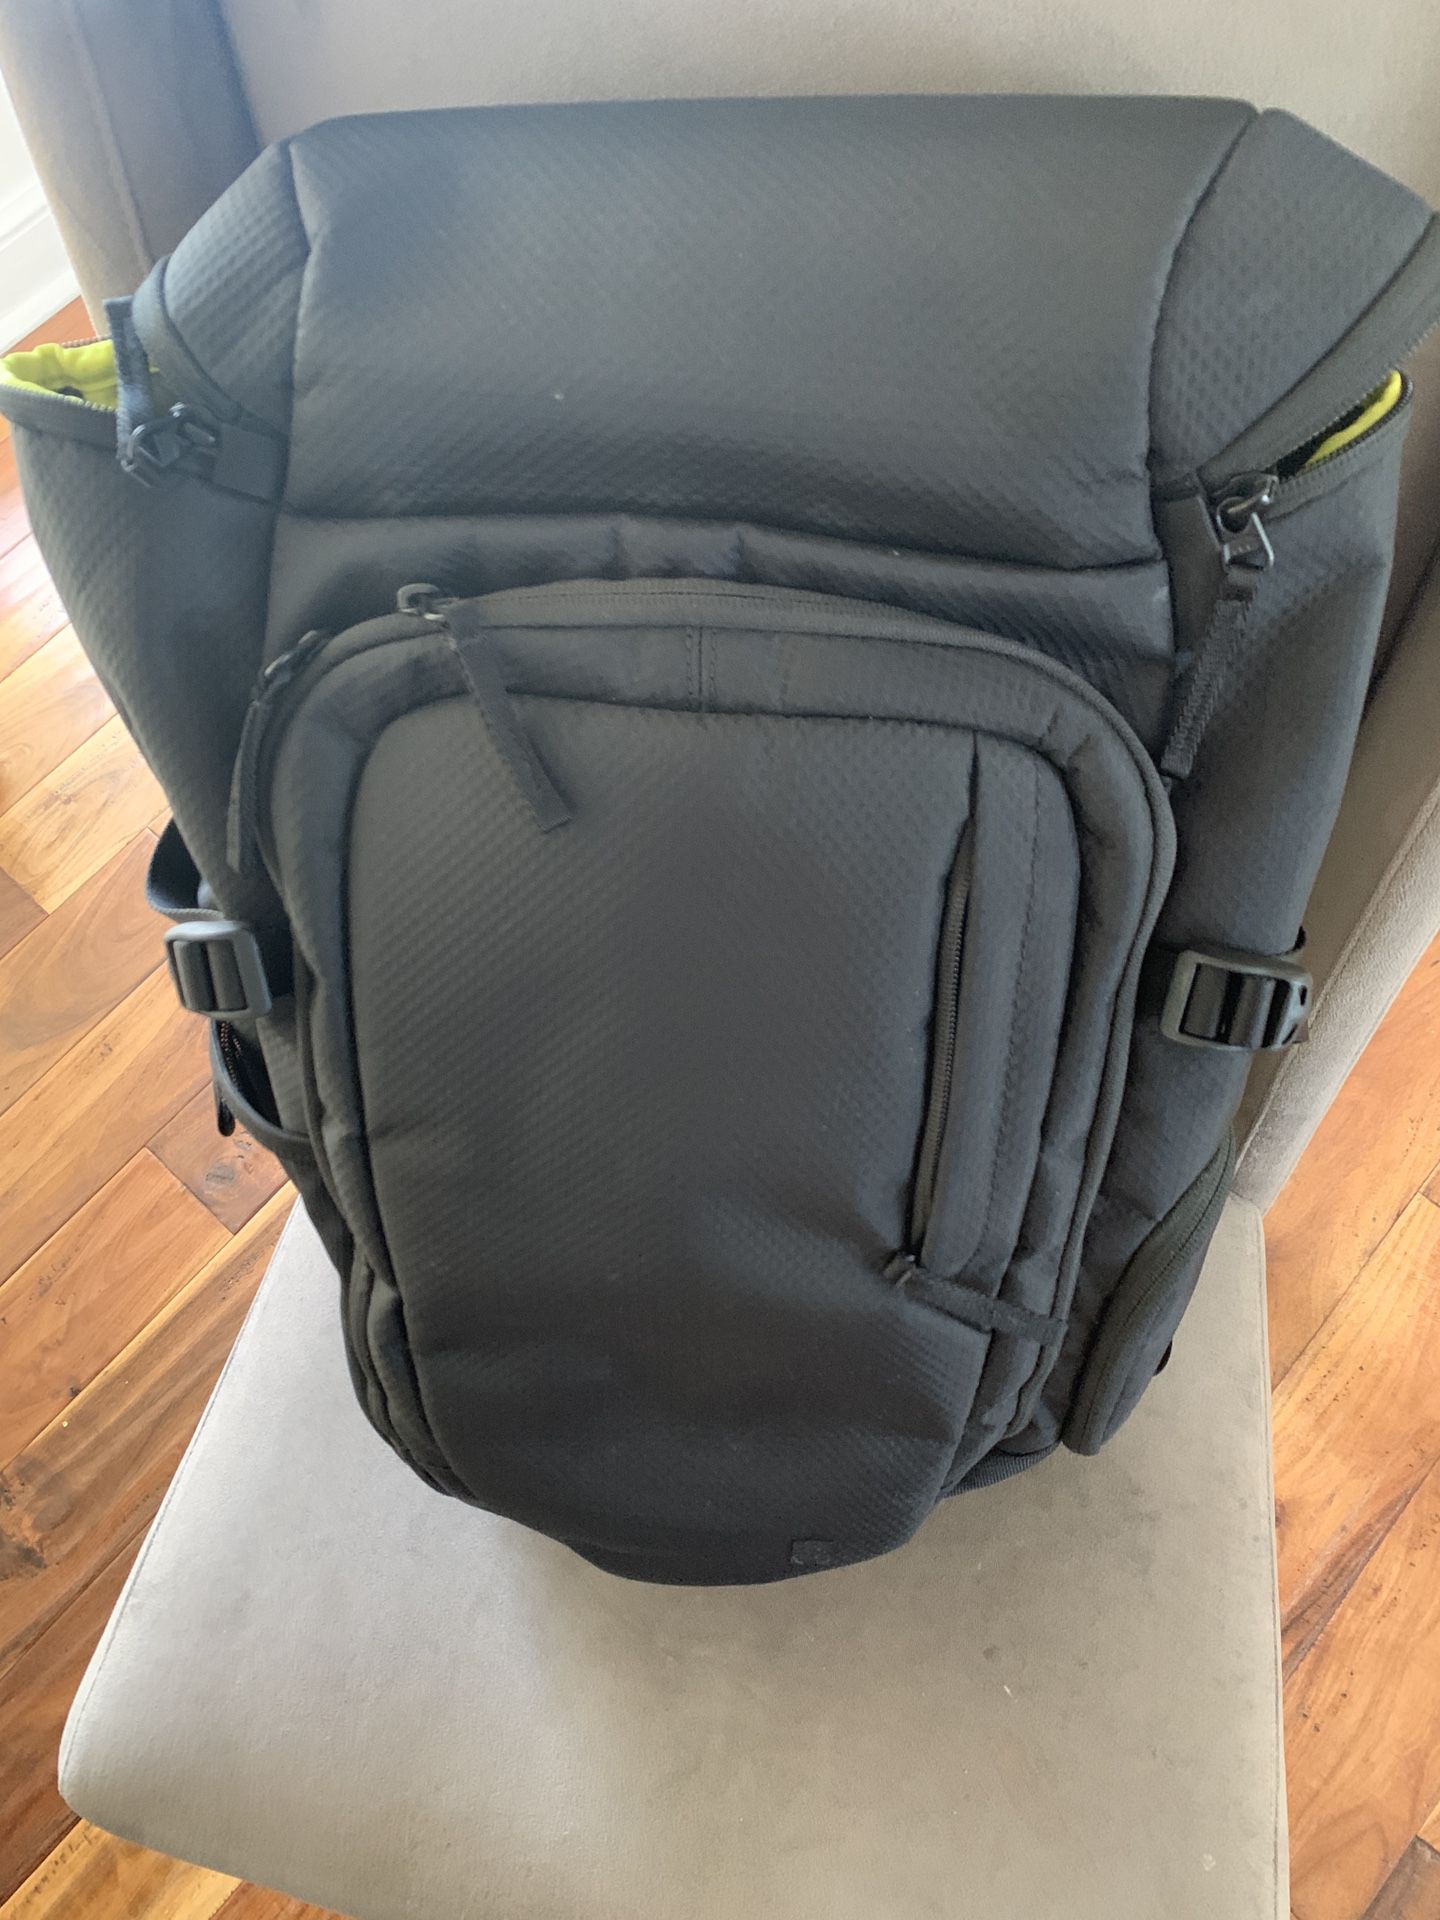 Lululemon backpack like new